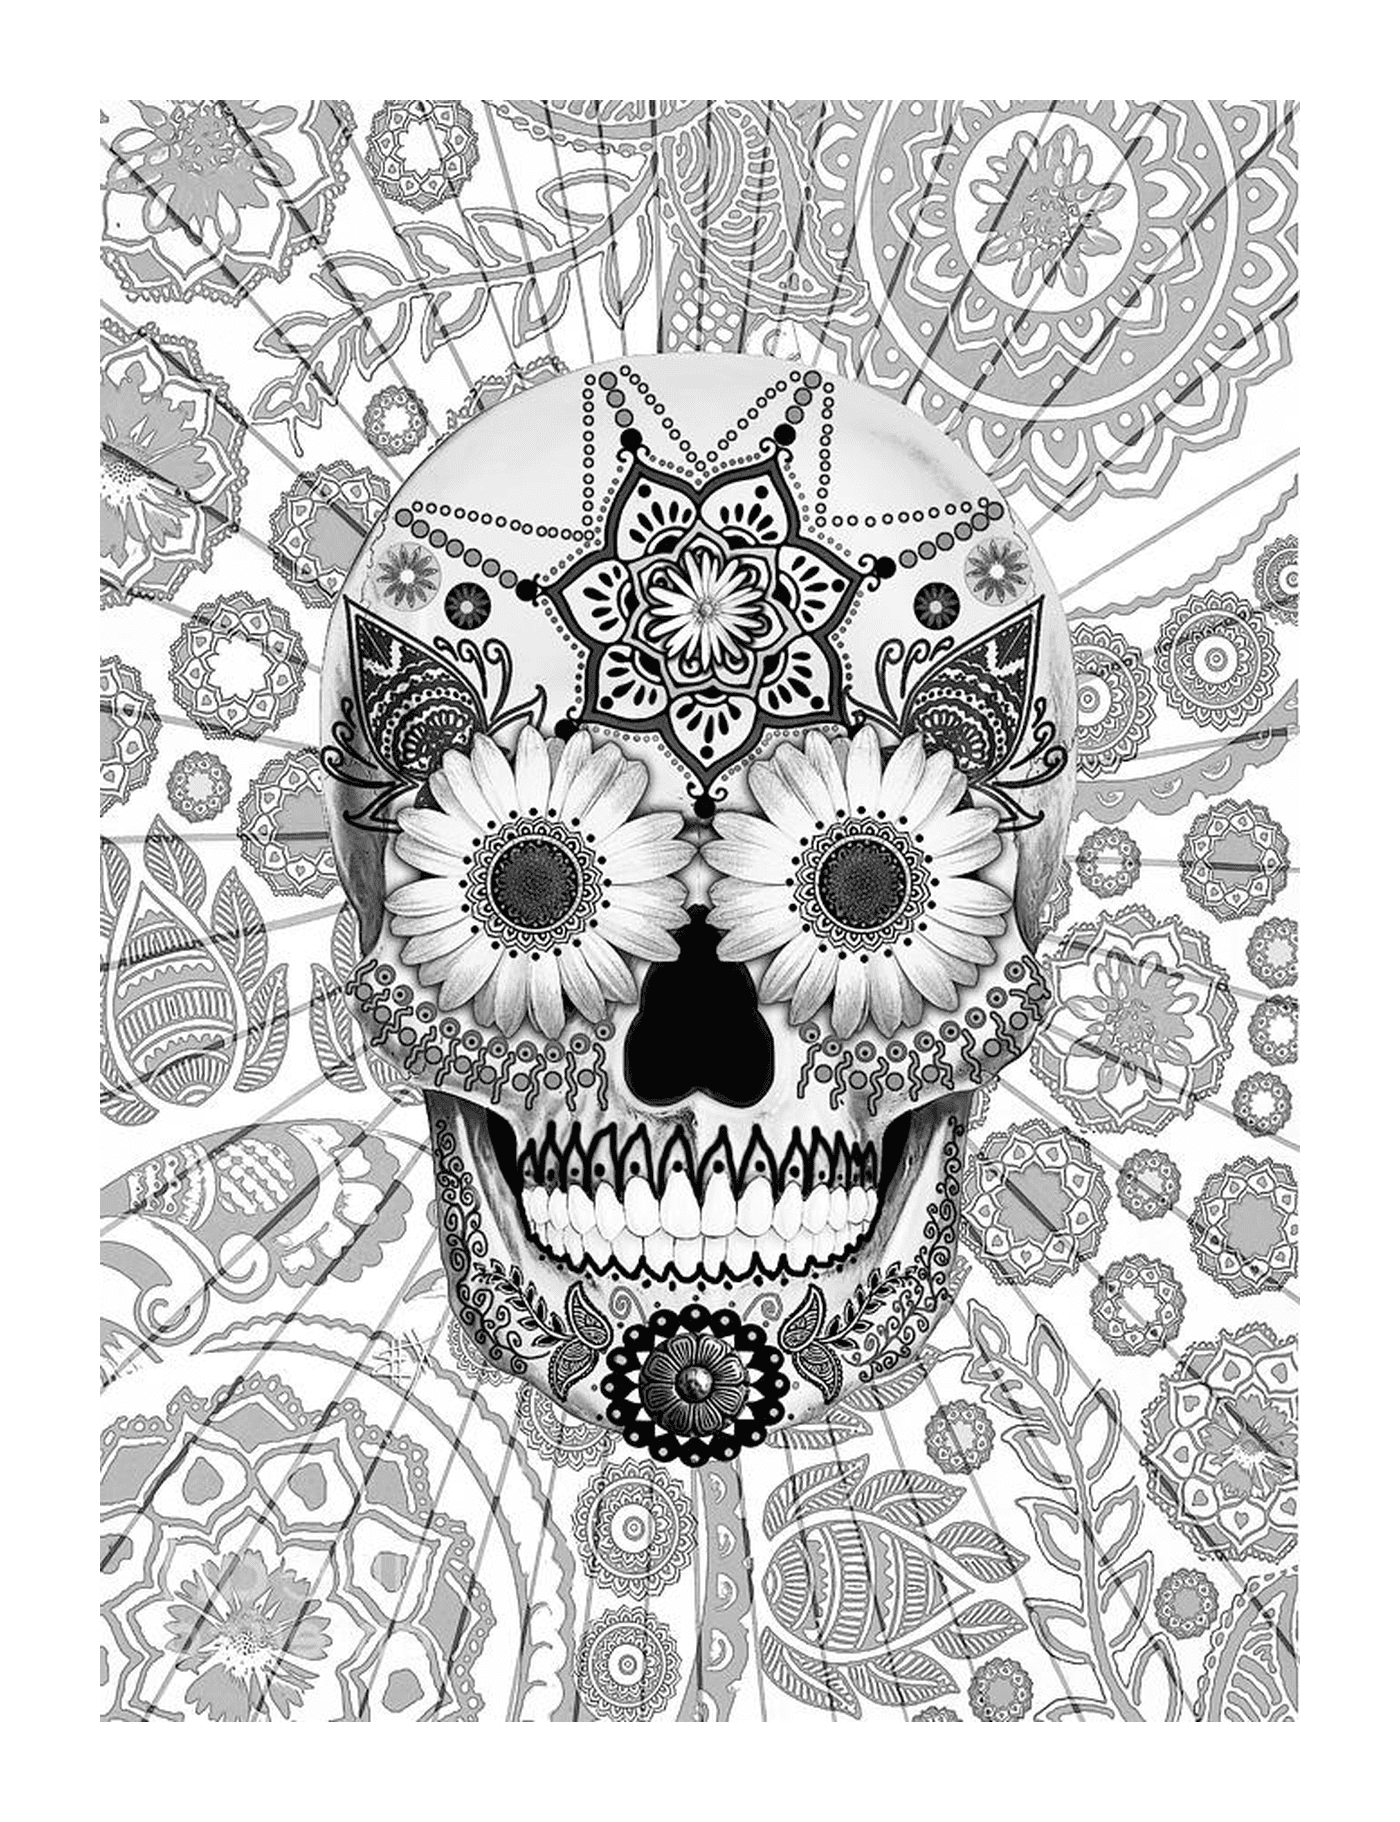   crâne effrayant par Christopher Beikmann 